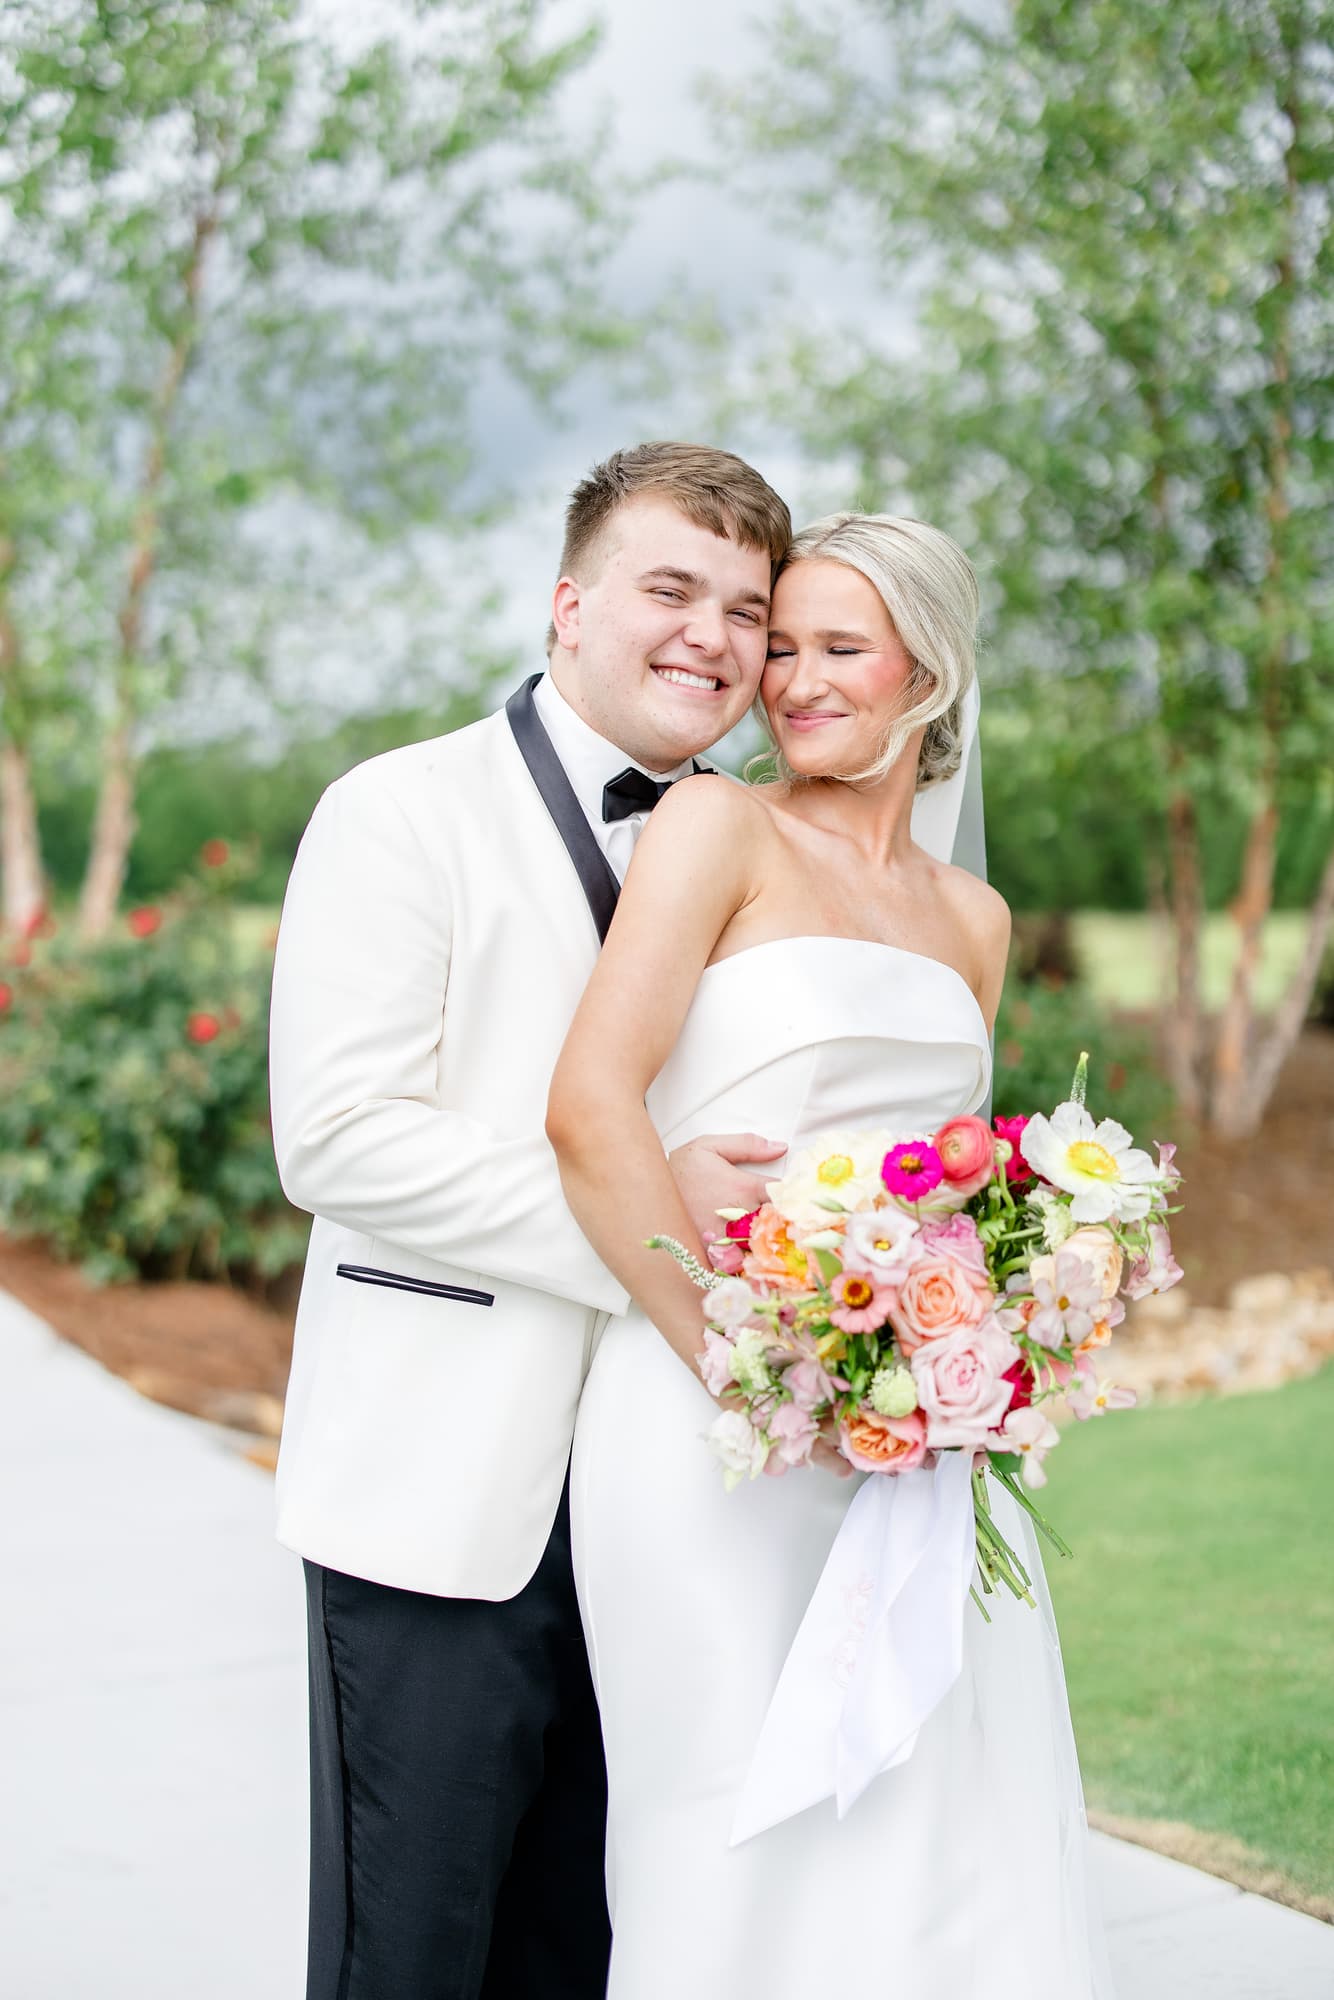 Ridge Pointe Event Center Wedding - Katie & Alec Photography - Birmingham, Alabama Wedding Photographers and Videographers